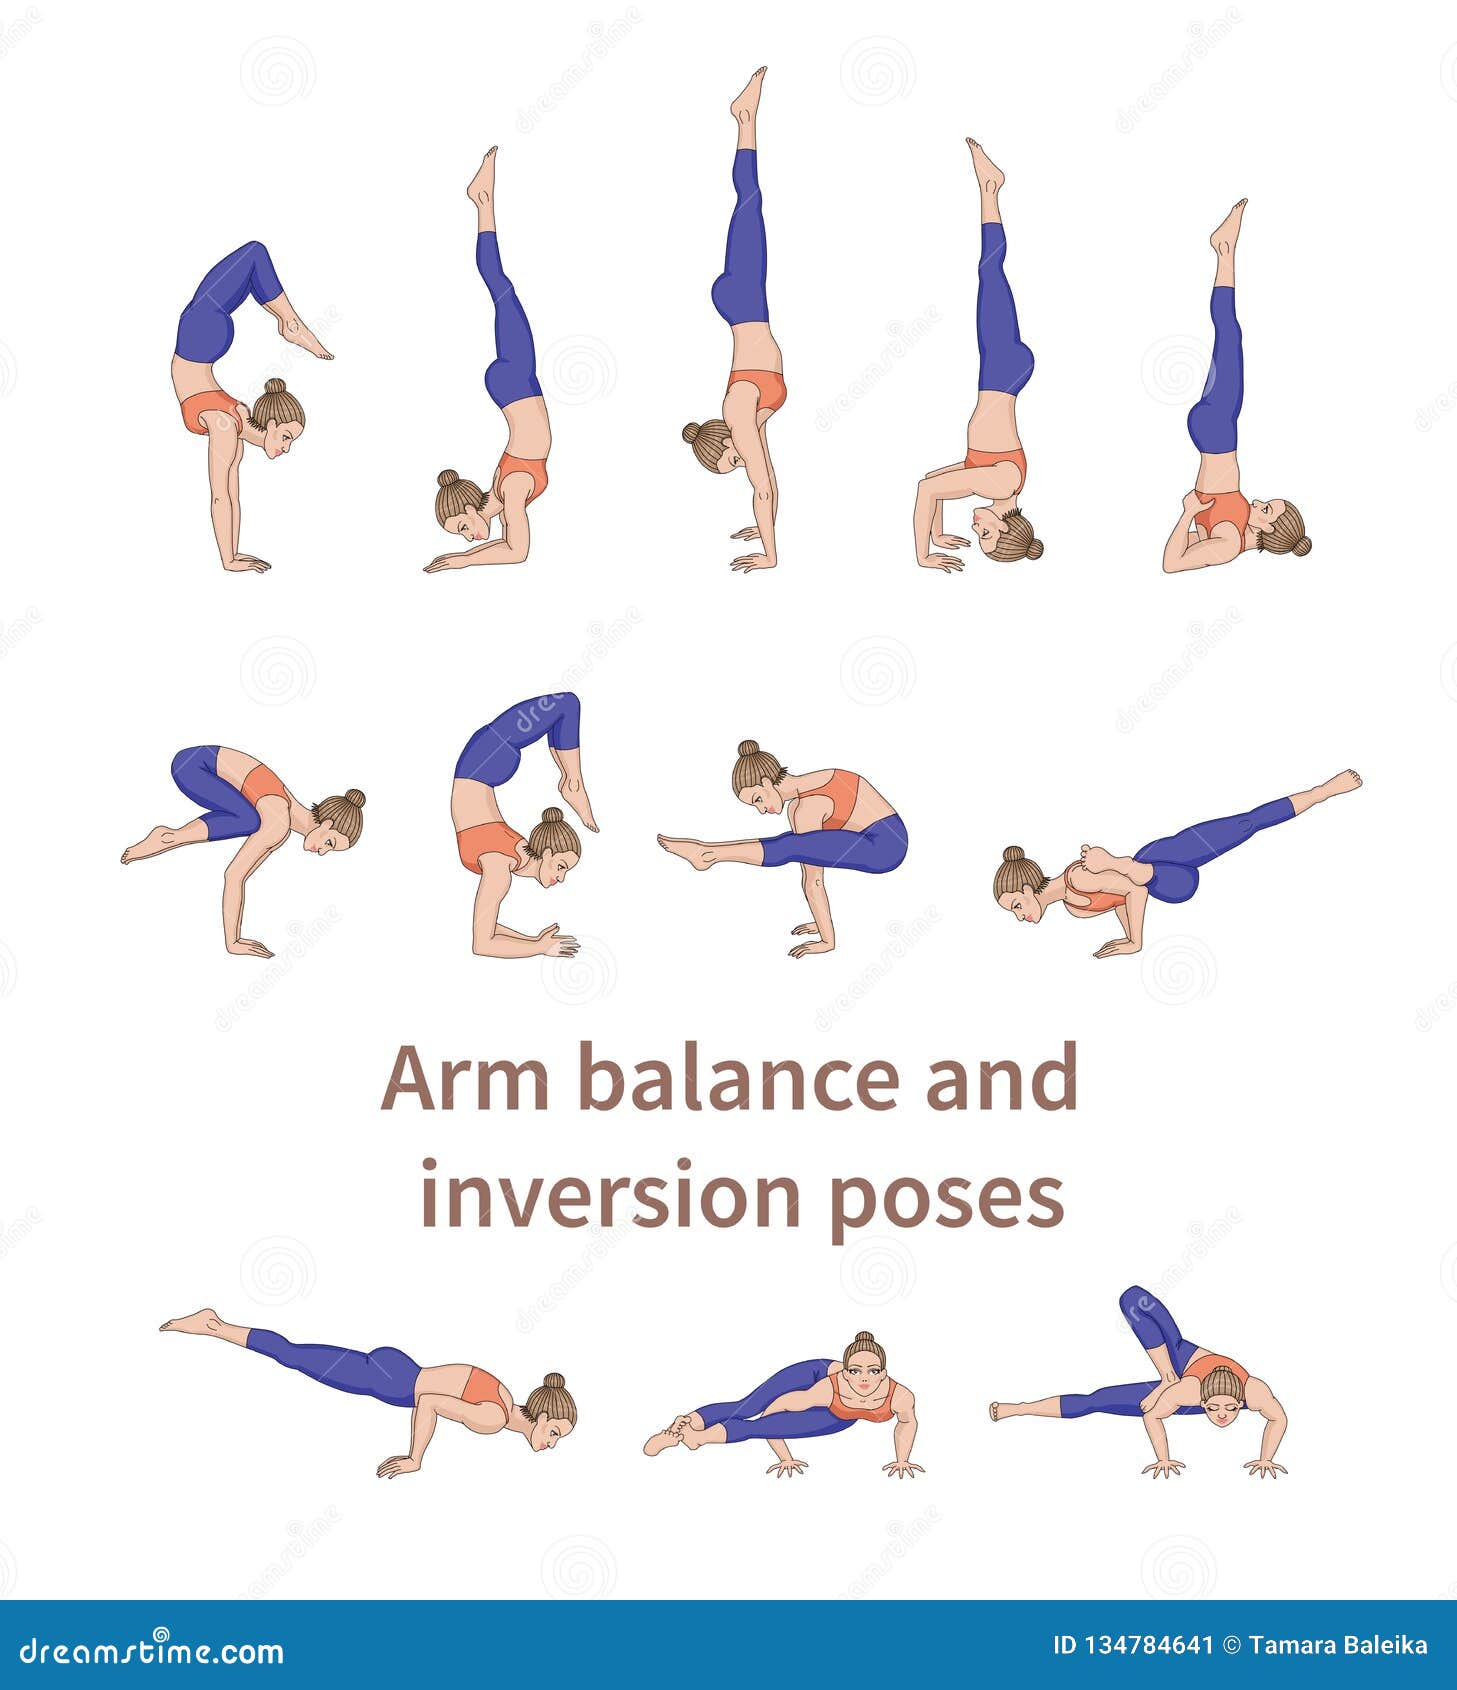 Yoga Postures for Better Balance